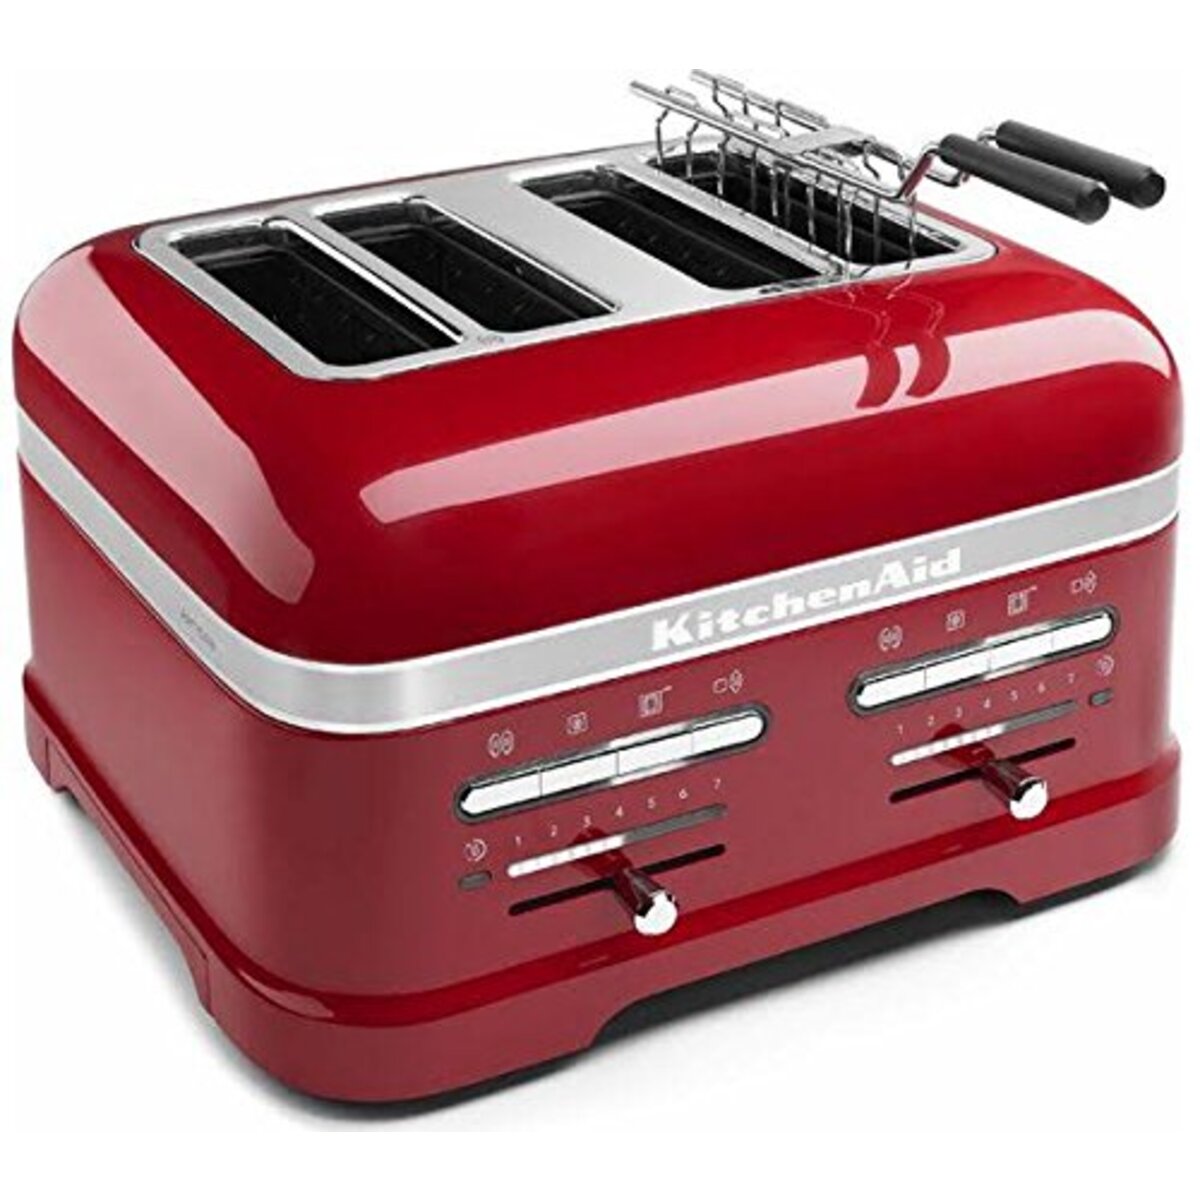 KitchenAid 5KMT4205BCA Artisan 4-Slot Toaster, Candy Apple